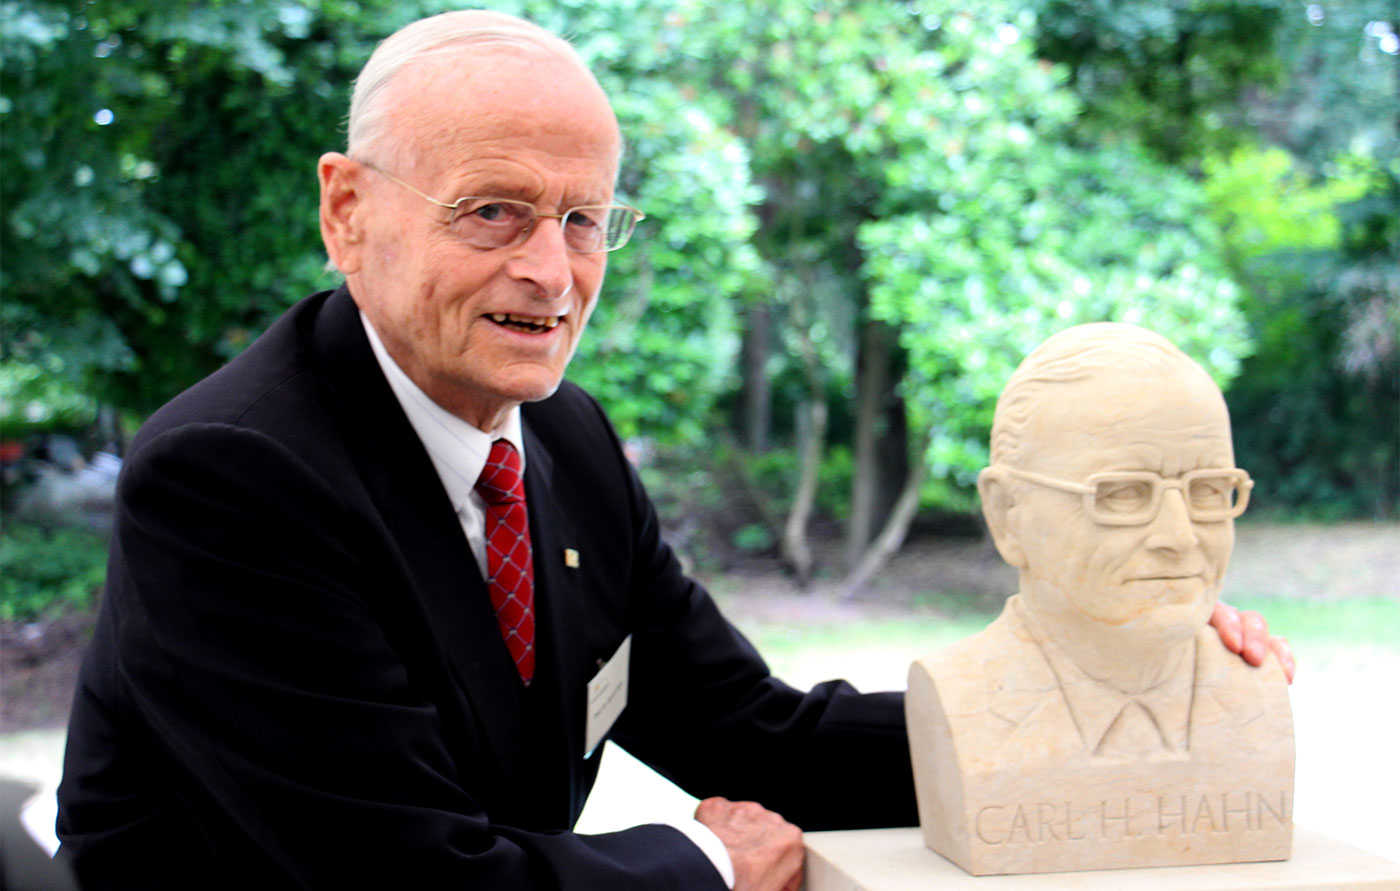 A festive surprise at Villa Hahn: Prof. Dr. Carl H. Hahn beside his portrait bust